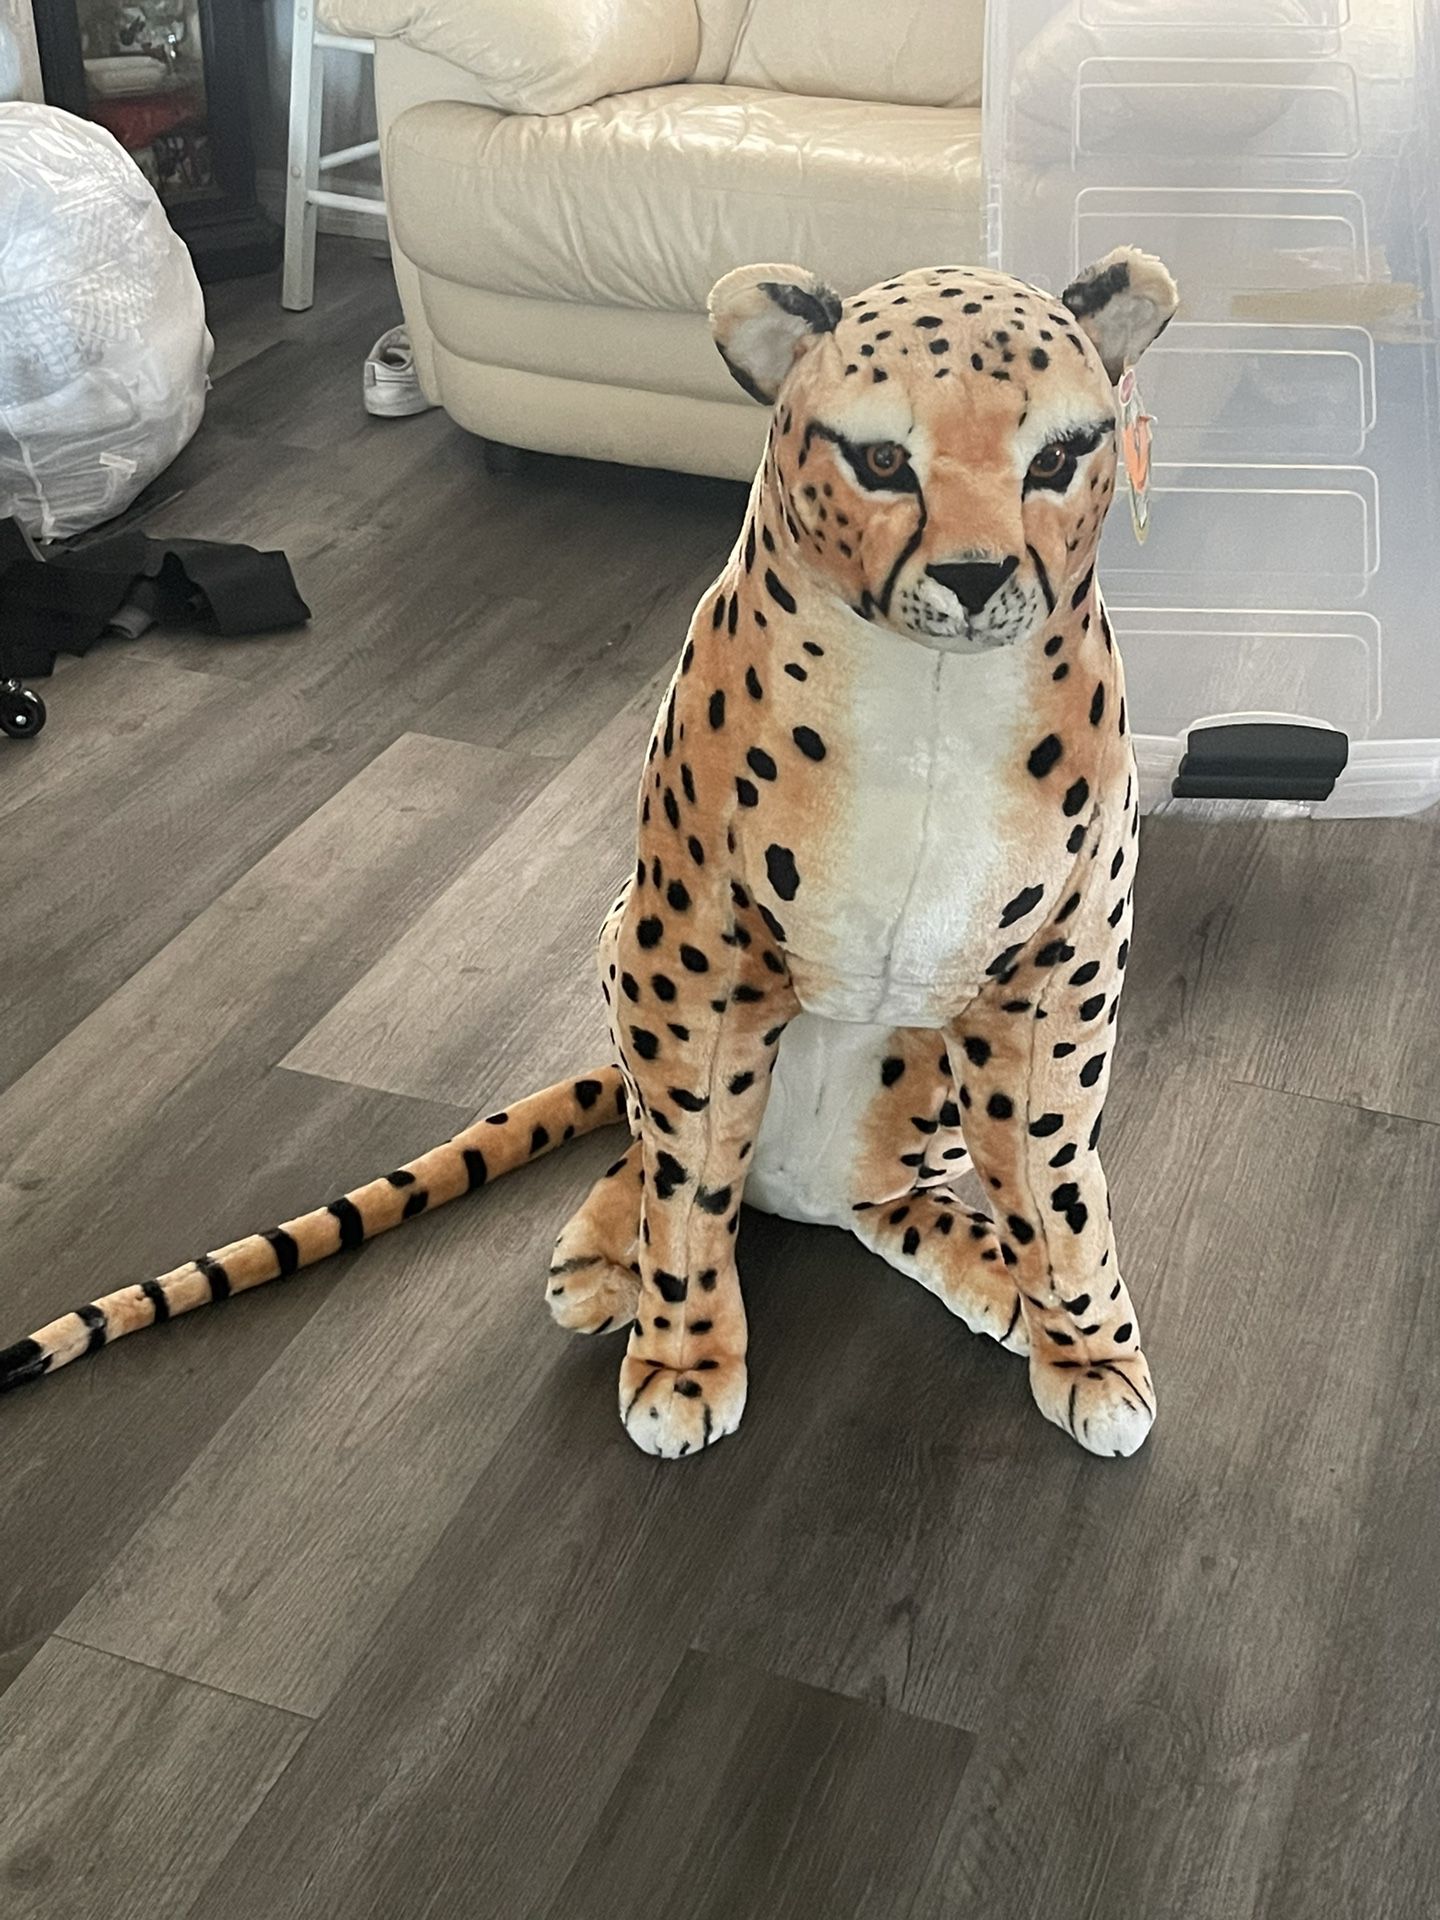 Life Like High Quality’ Stuffed Cheetah